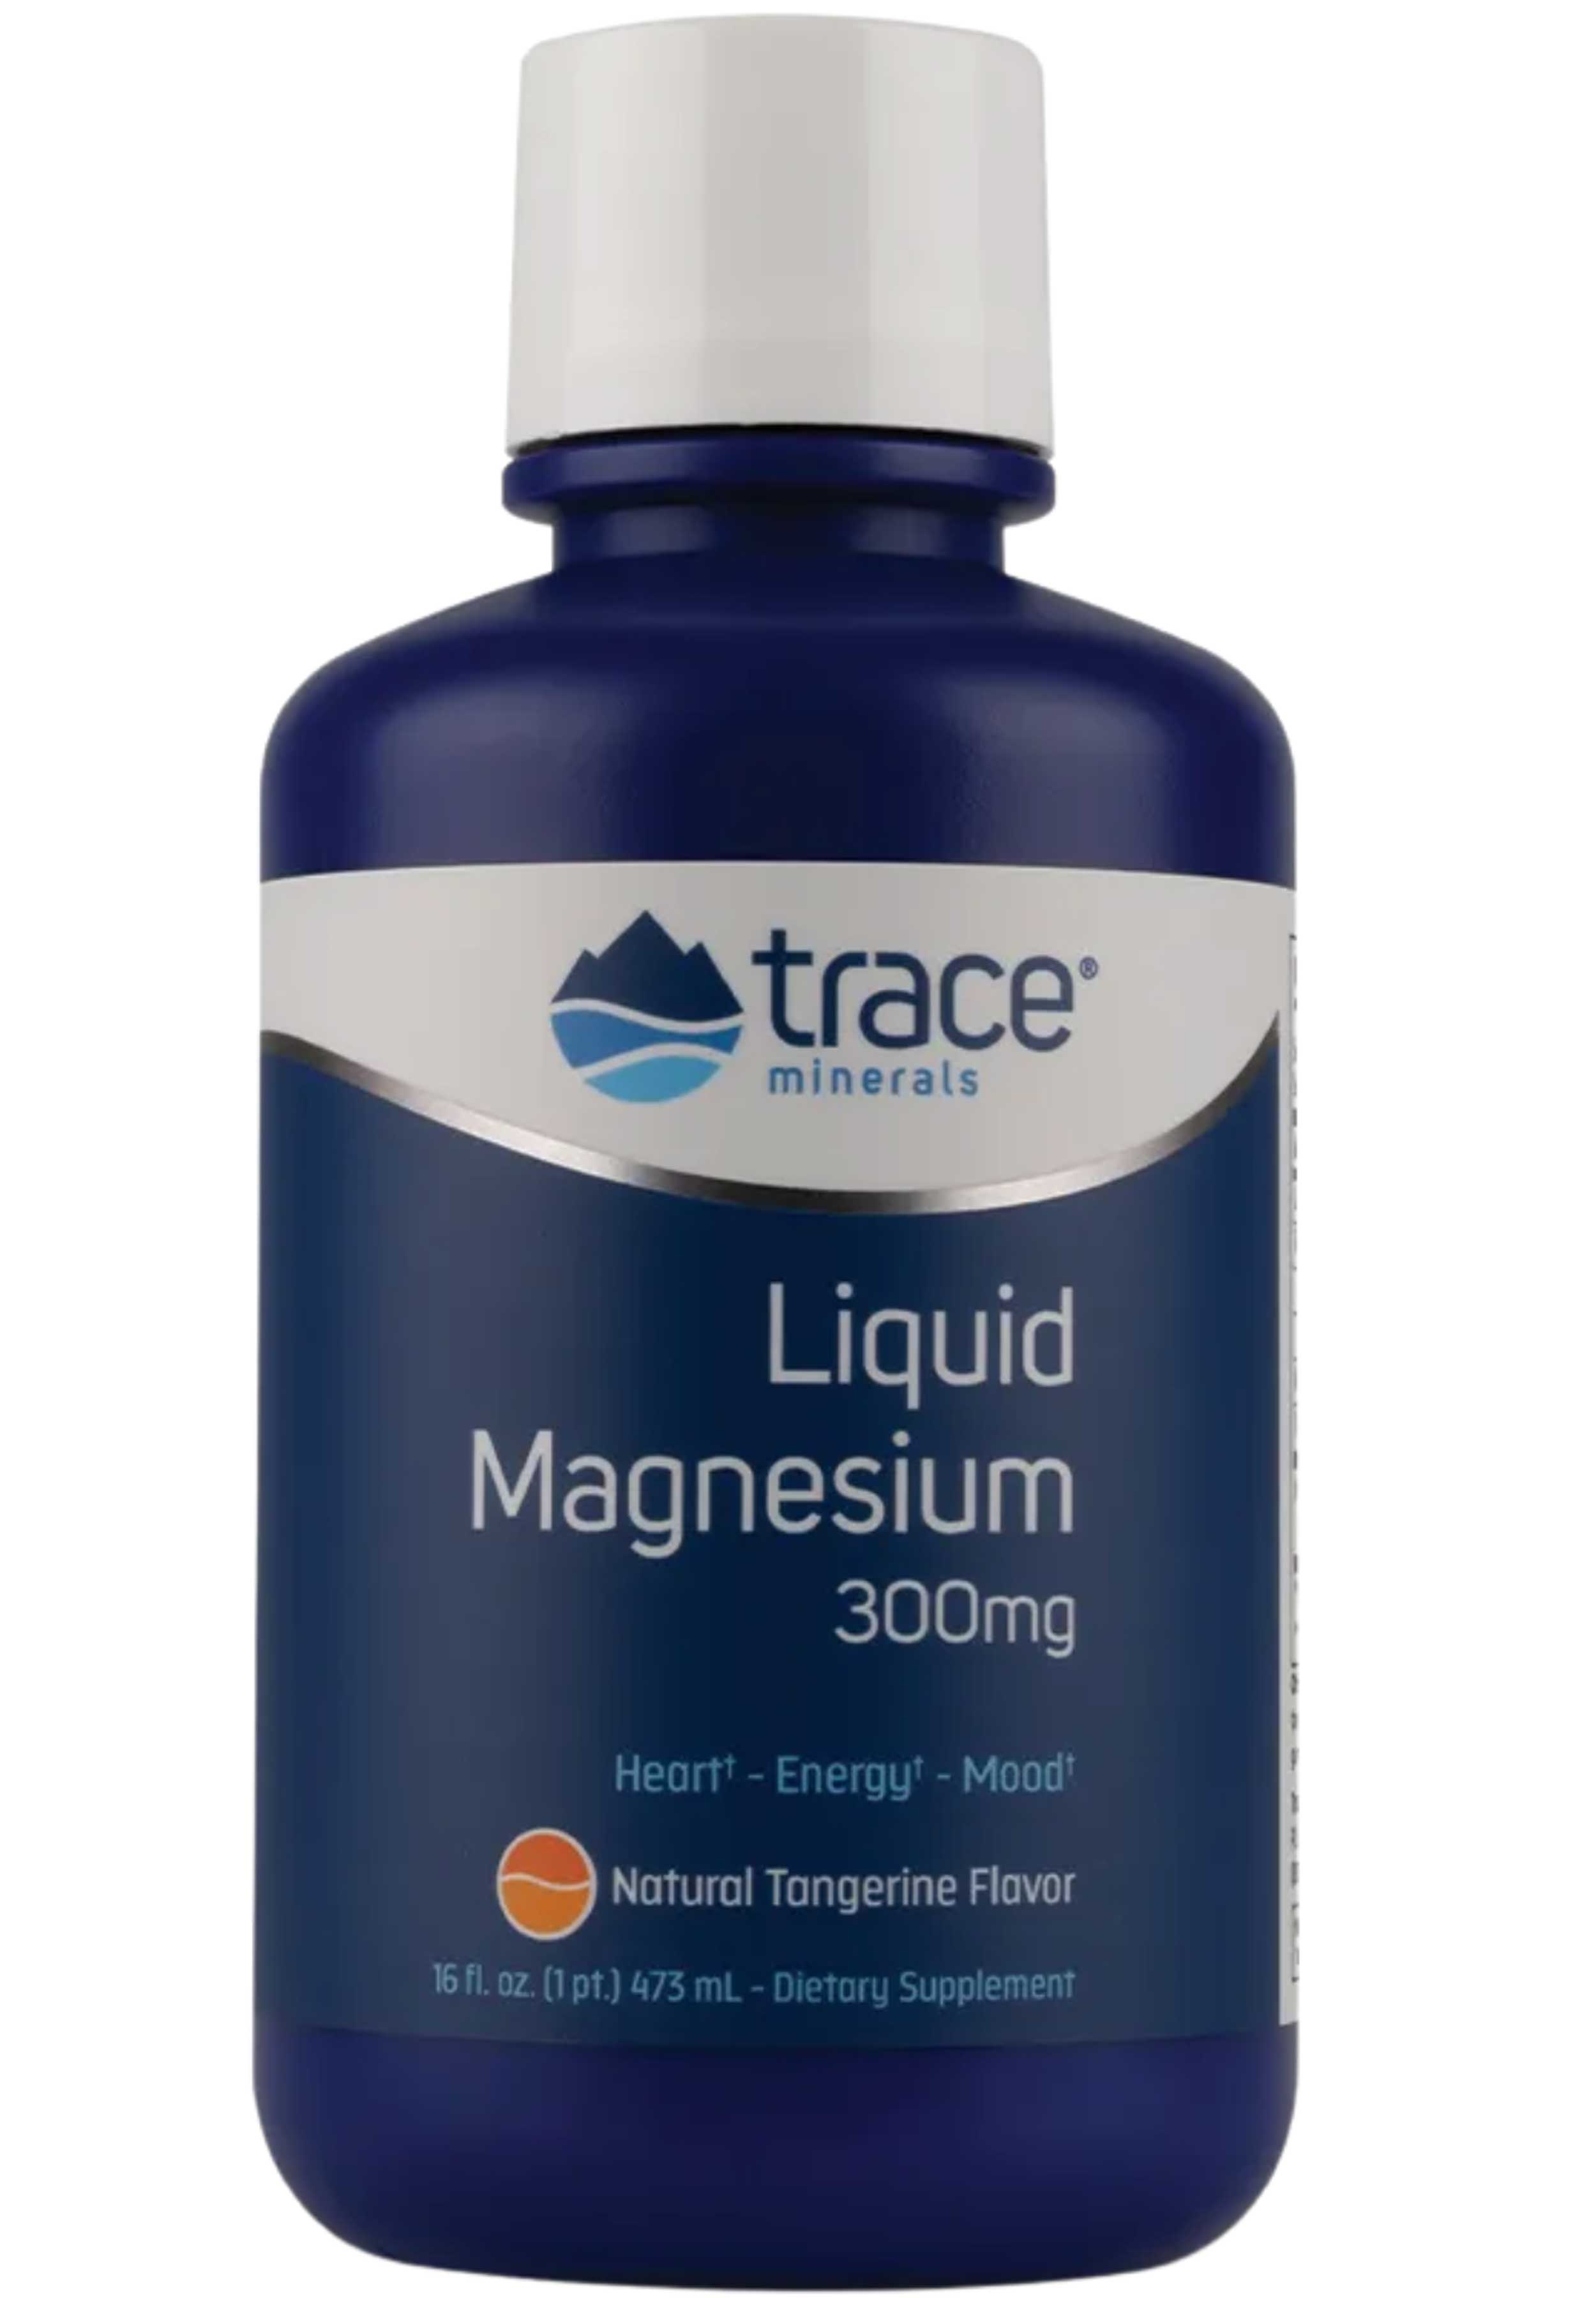 Trace Minerals Research Liquid Magnesium